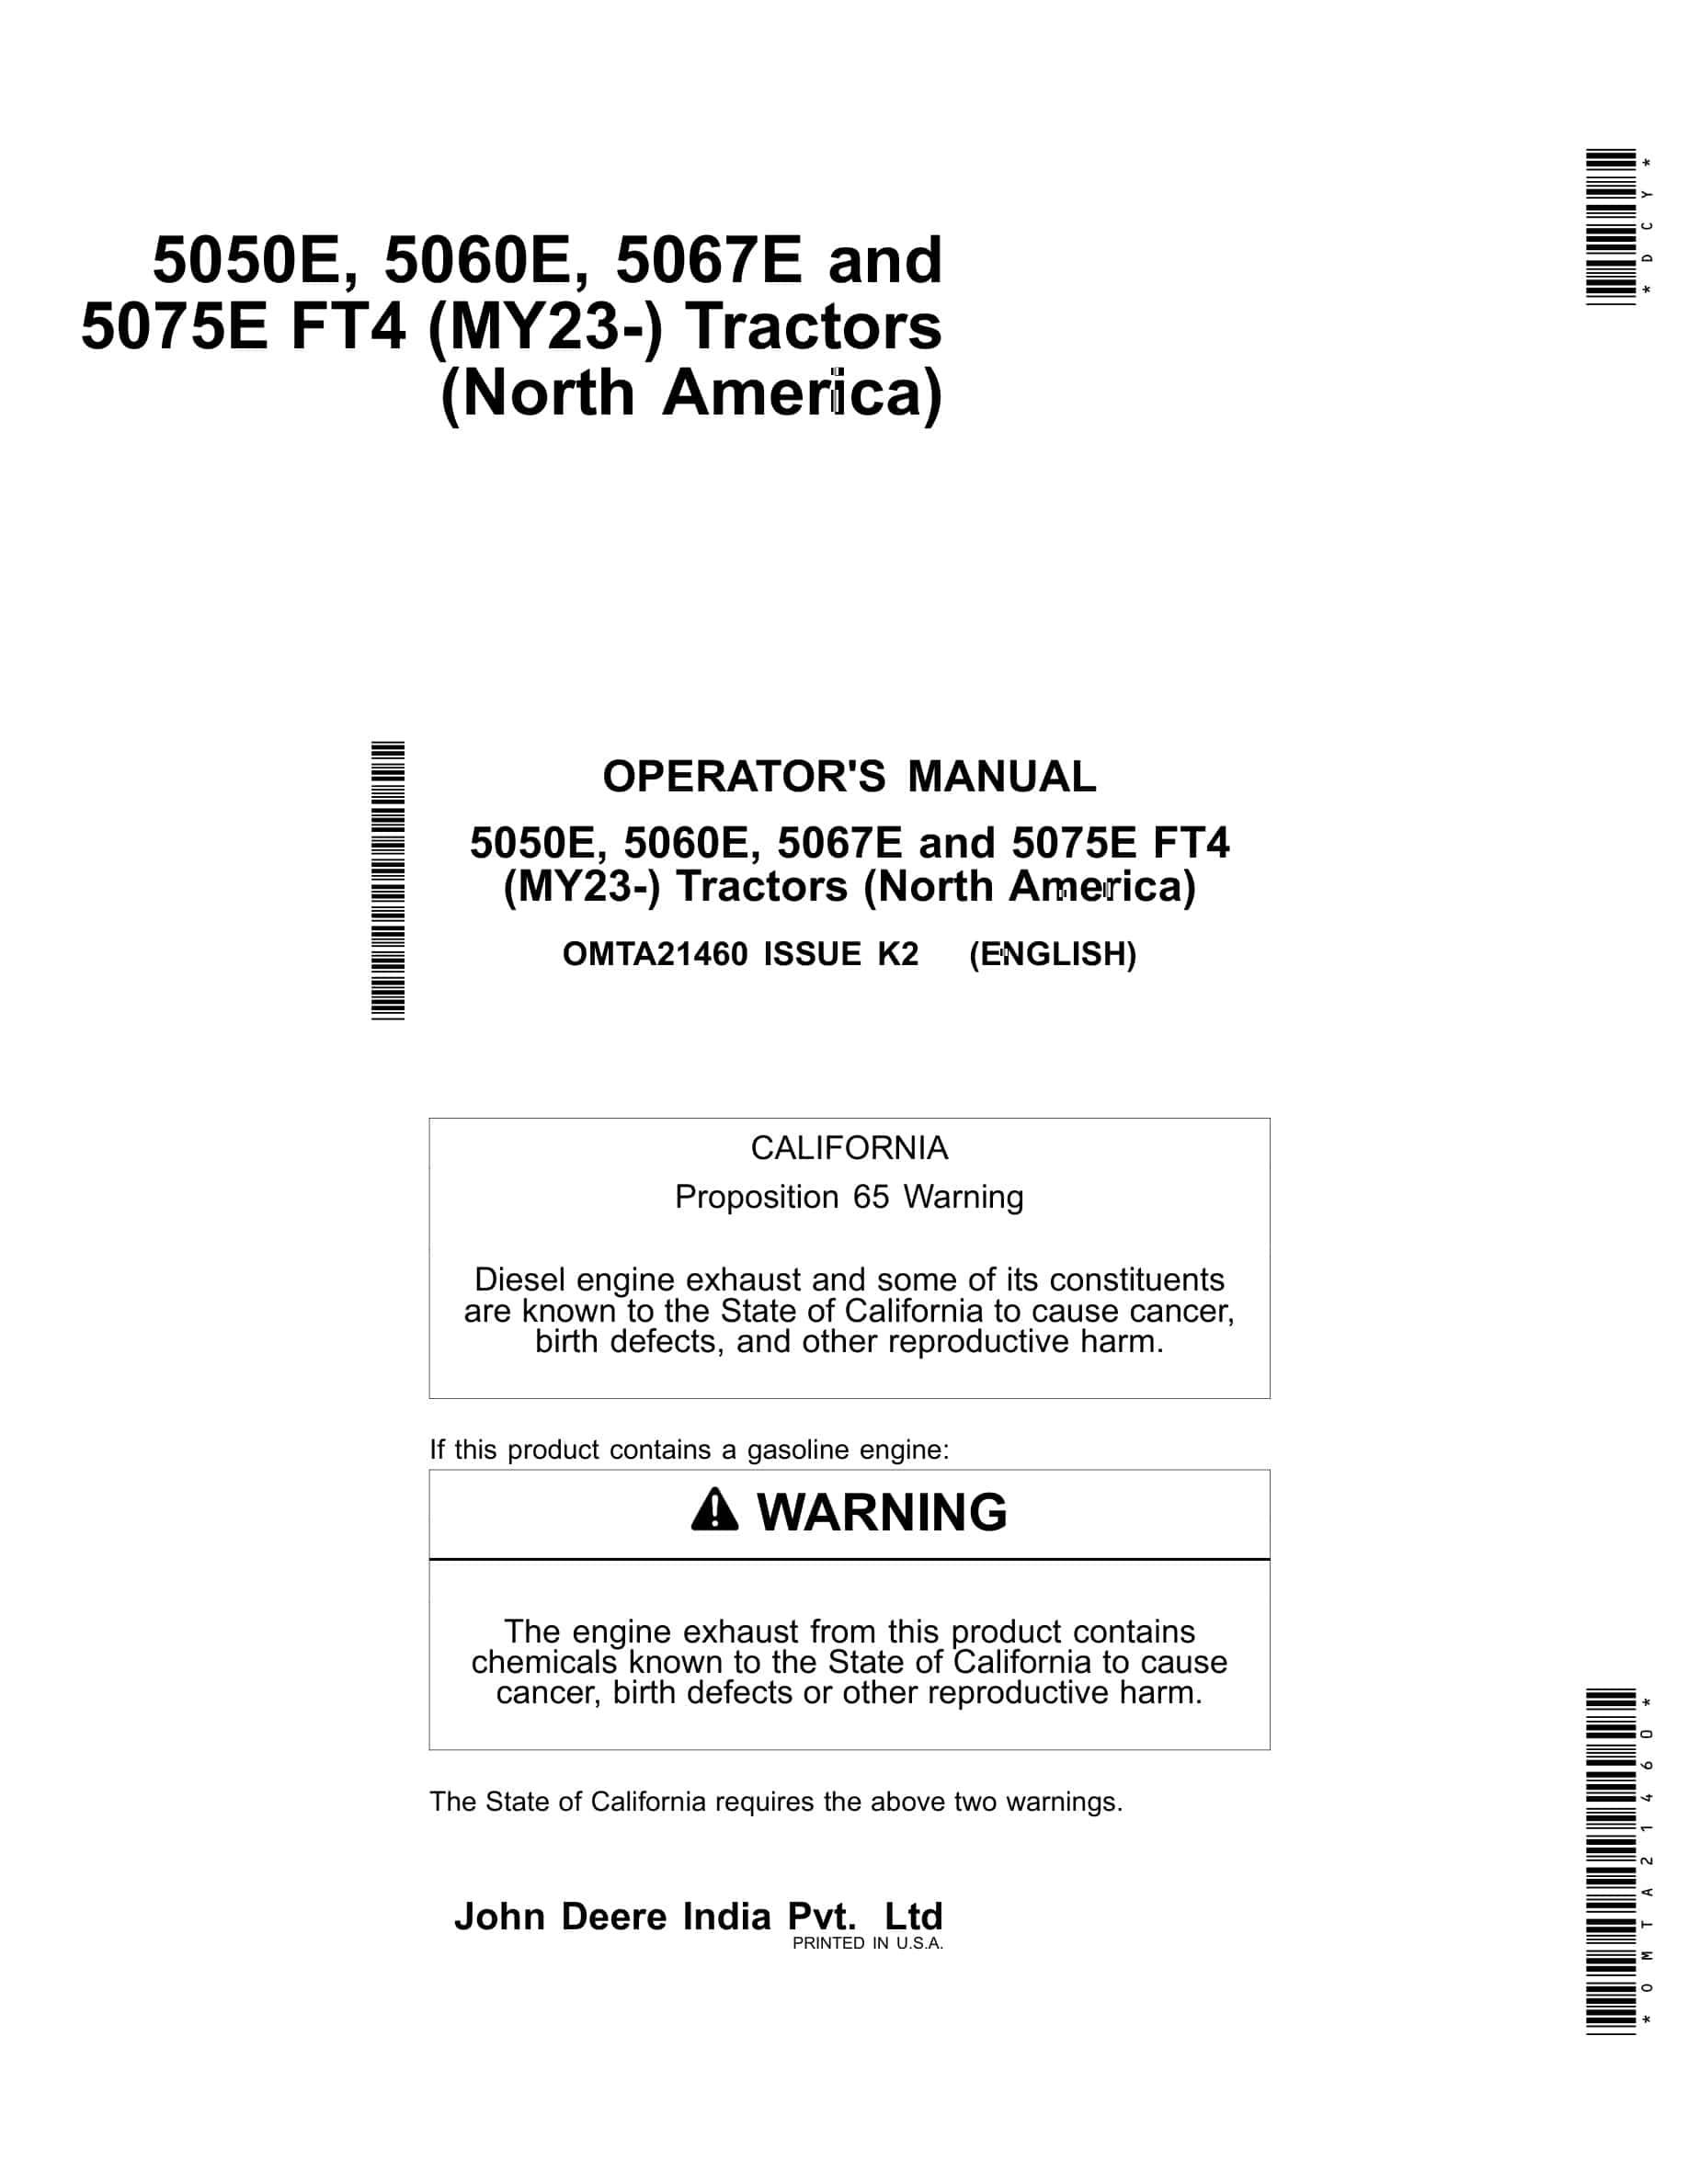 John Deere 5050e, 5060e, 5067e And 5075e Ft4 Tractors Operator Manuals OMTA21460-1